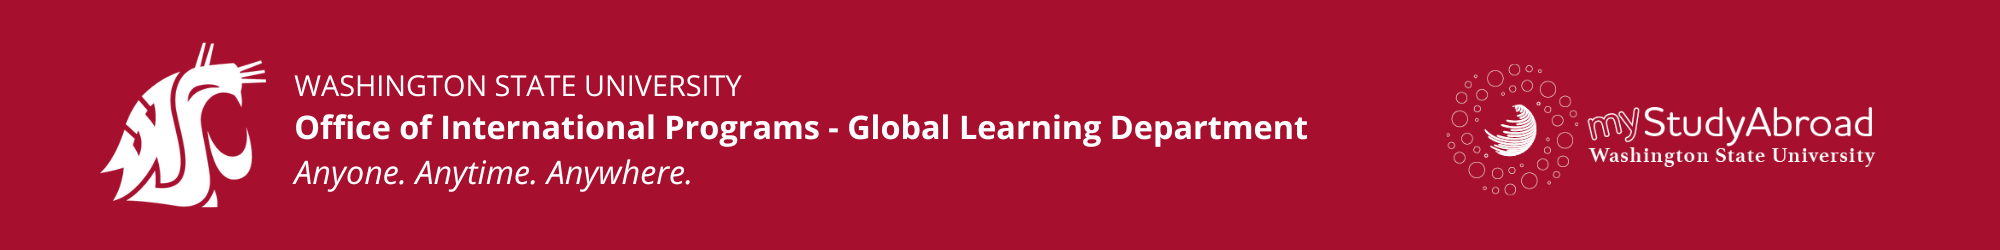 International Programs - Global Learning - Washington State University